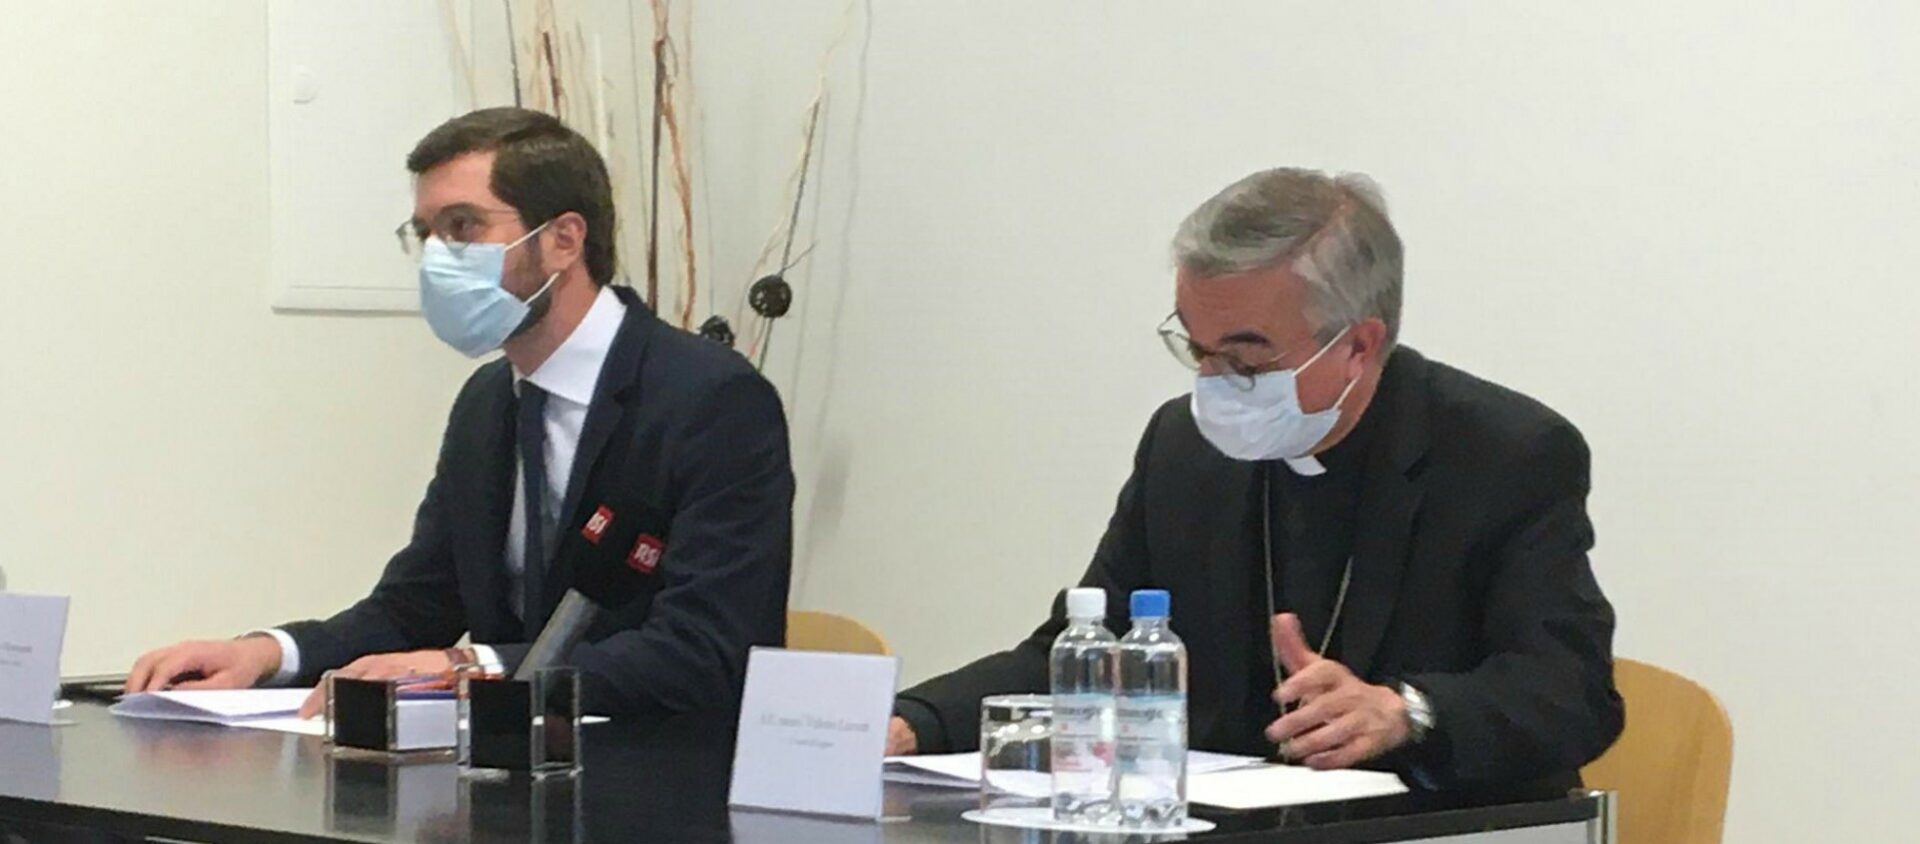 Mgr Valerio Lazzeri (à droite), lors de la conférence de presse dimanche 31 mai 2020 à Lugano | © catt.ch